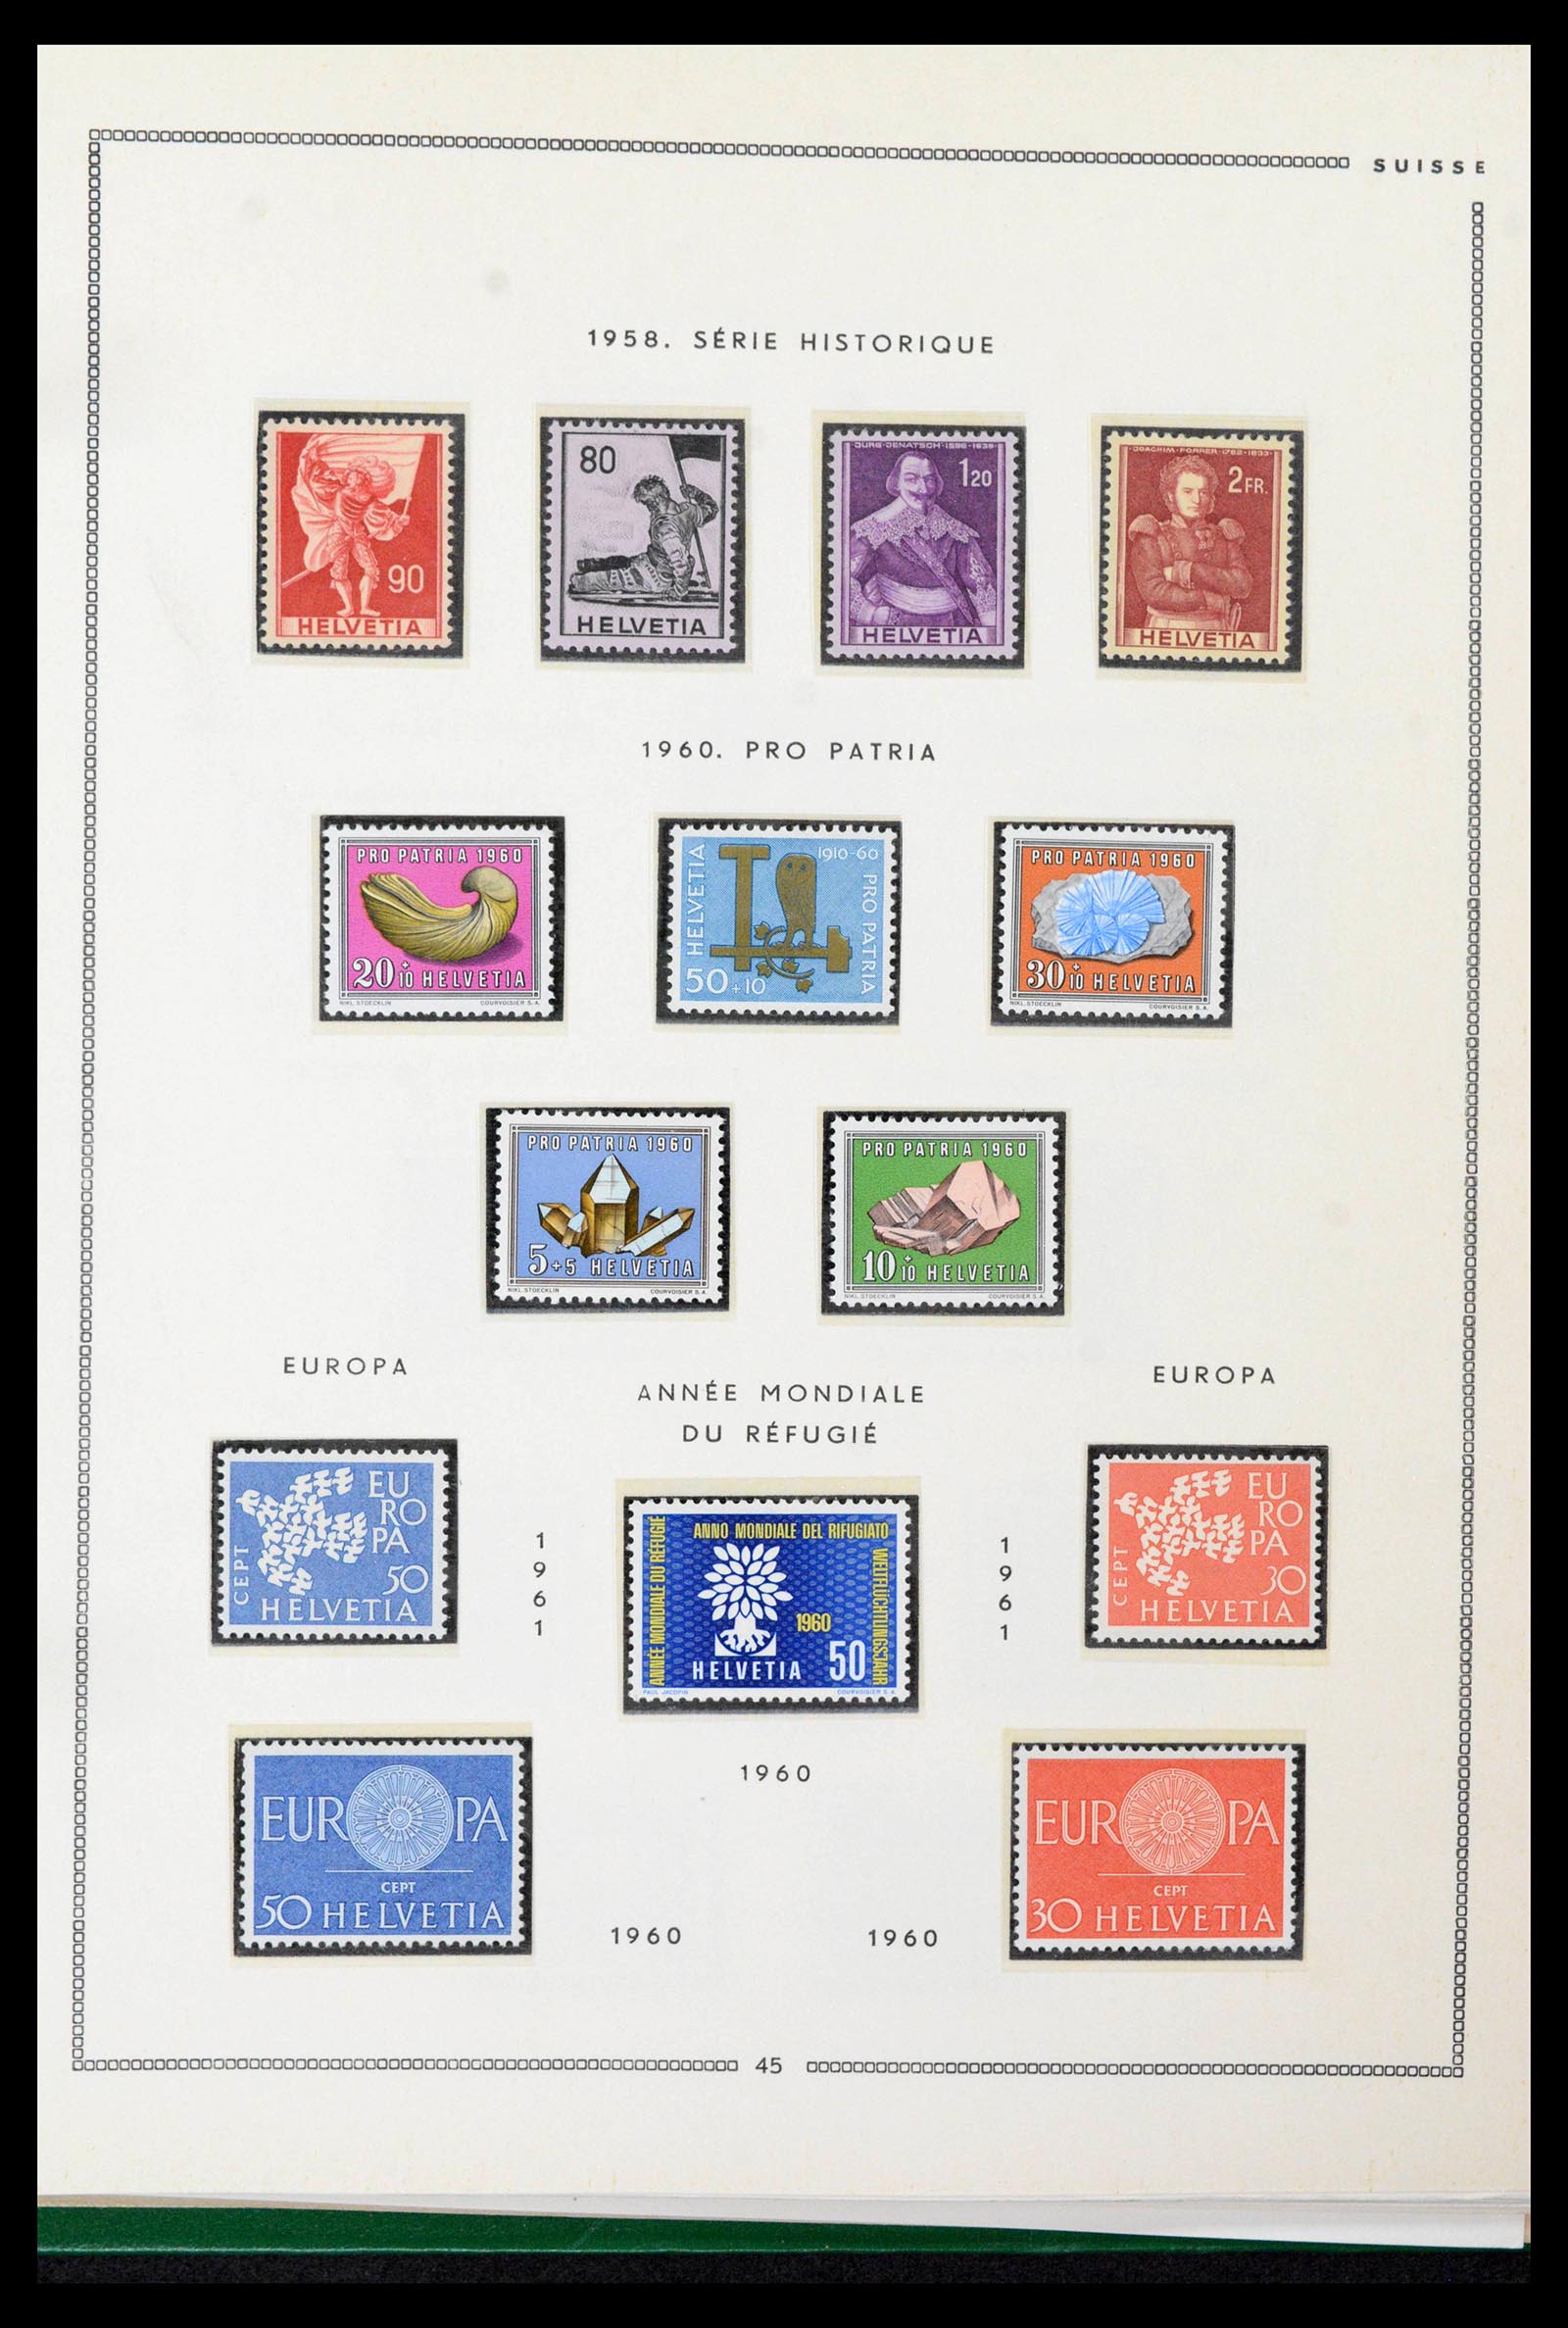 39096 0040 - Stamp collection 39096 Switzerland 1907-1963.